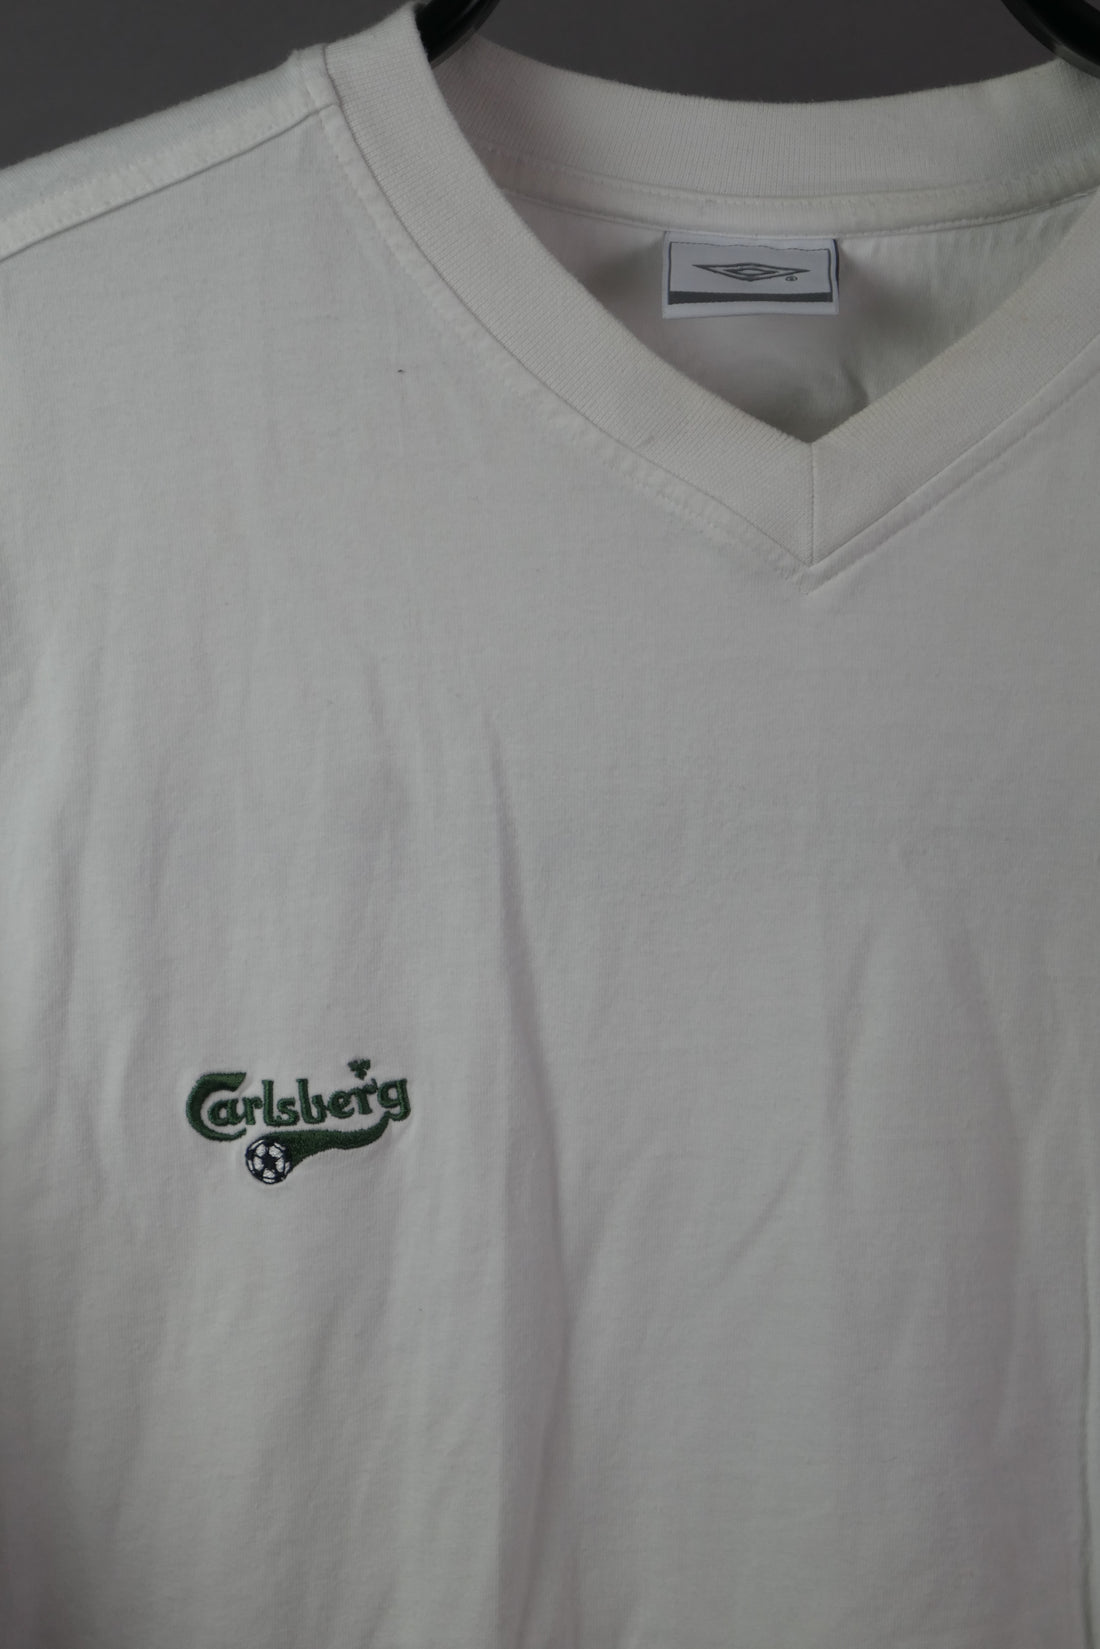 The Vintage Umbro Carlsberg Embroidered T-Shirt (XL)